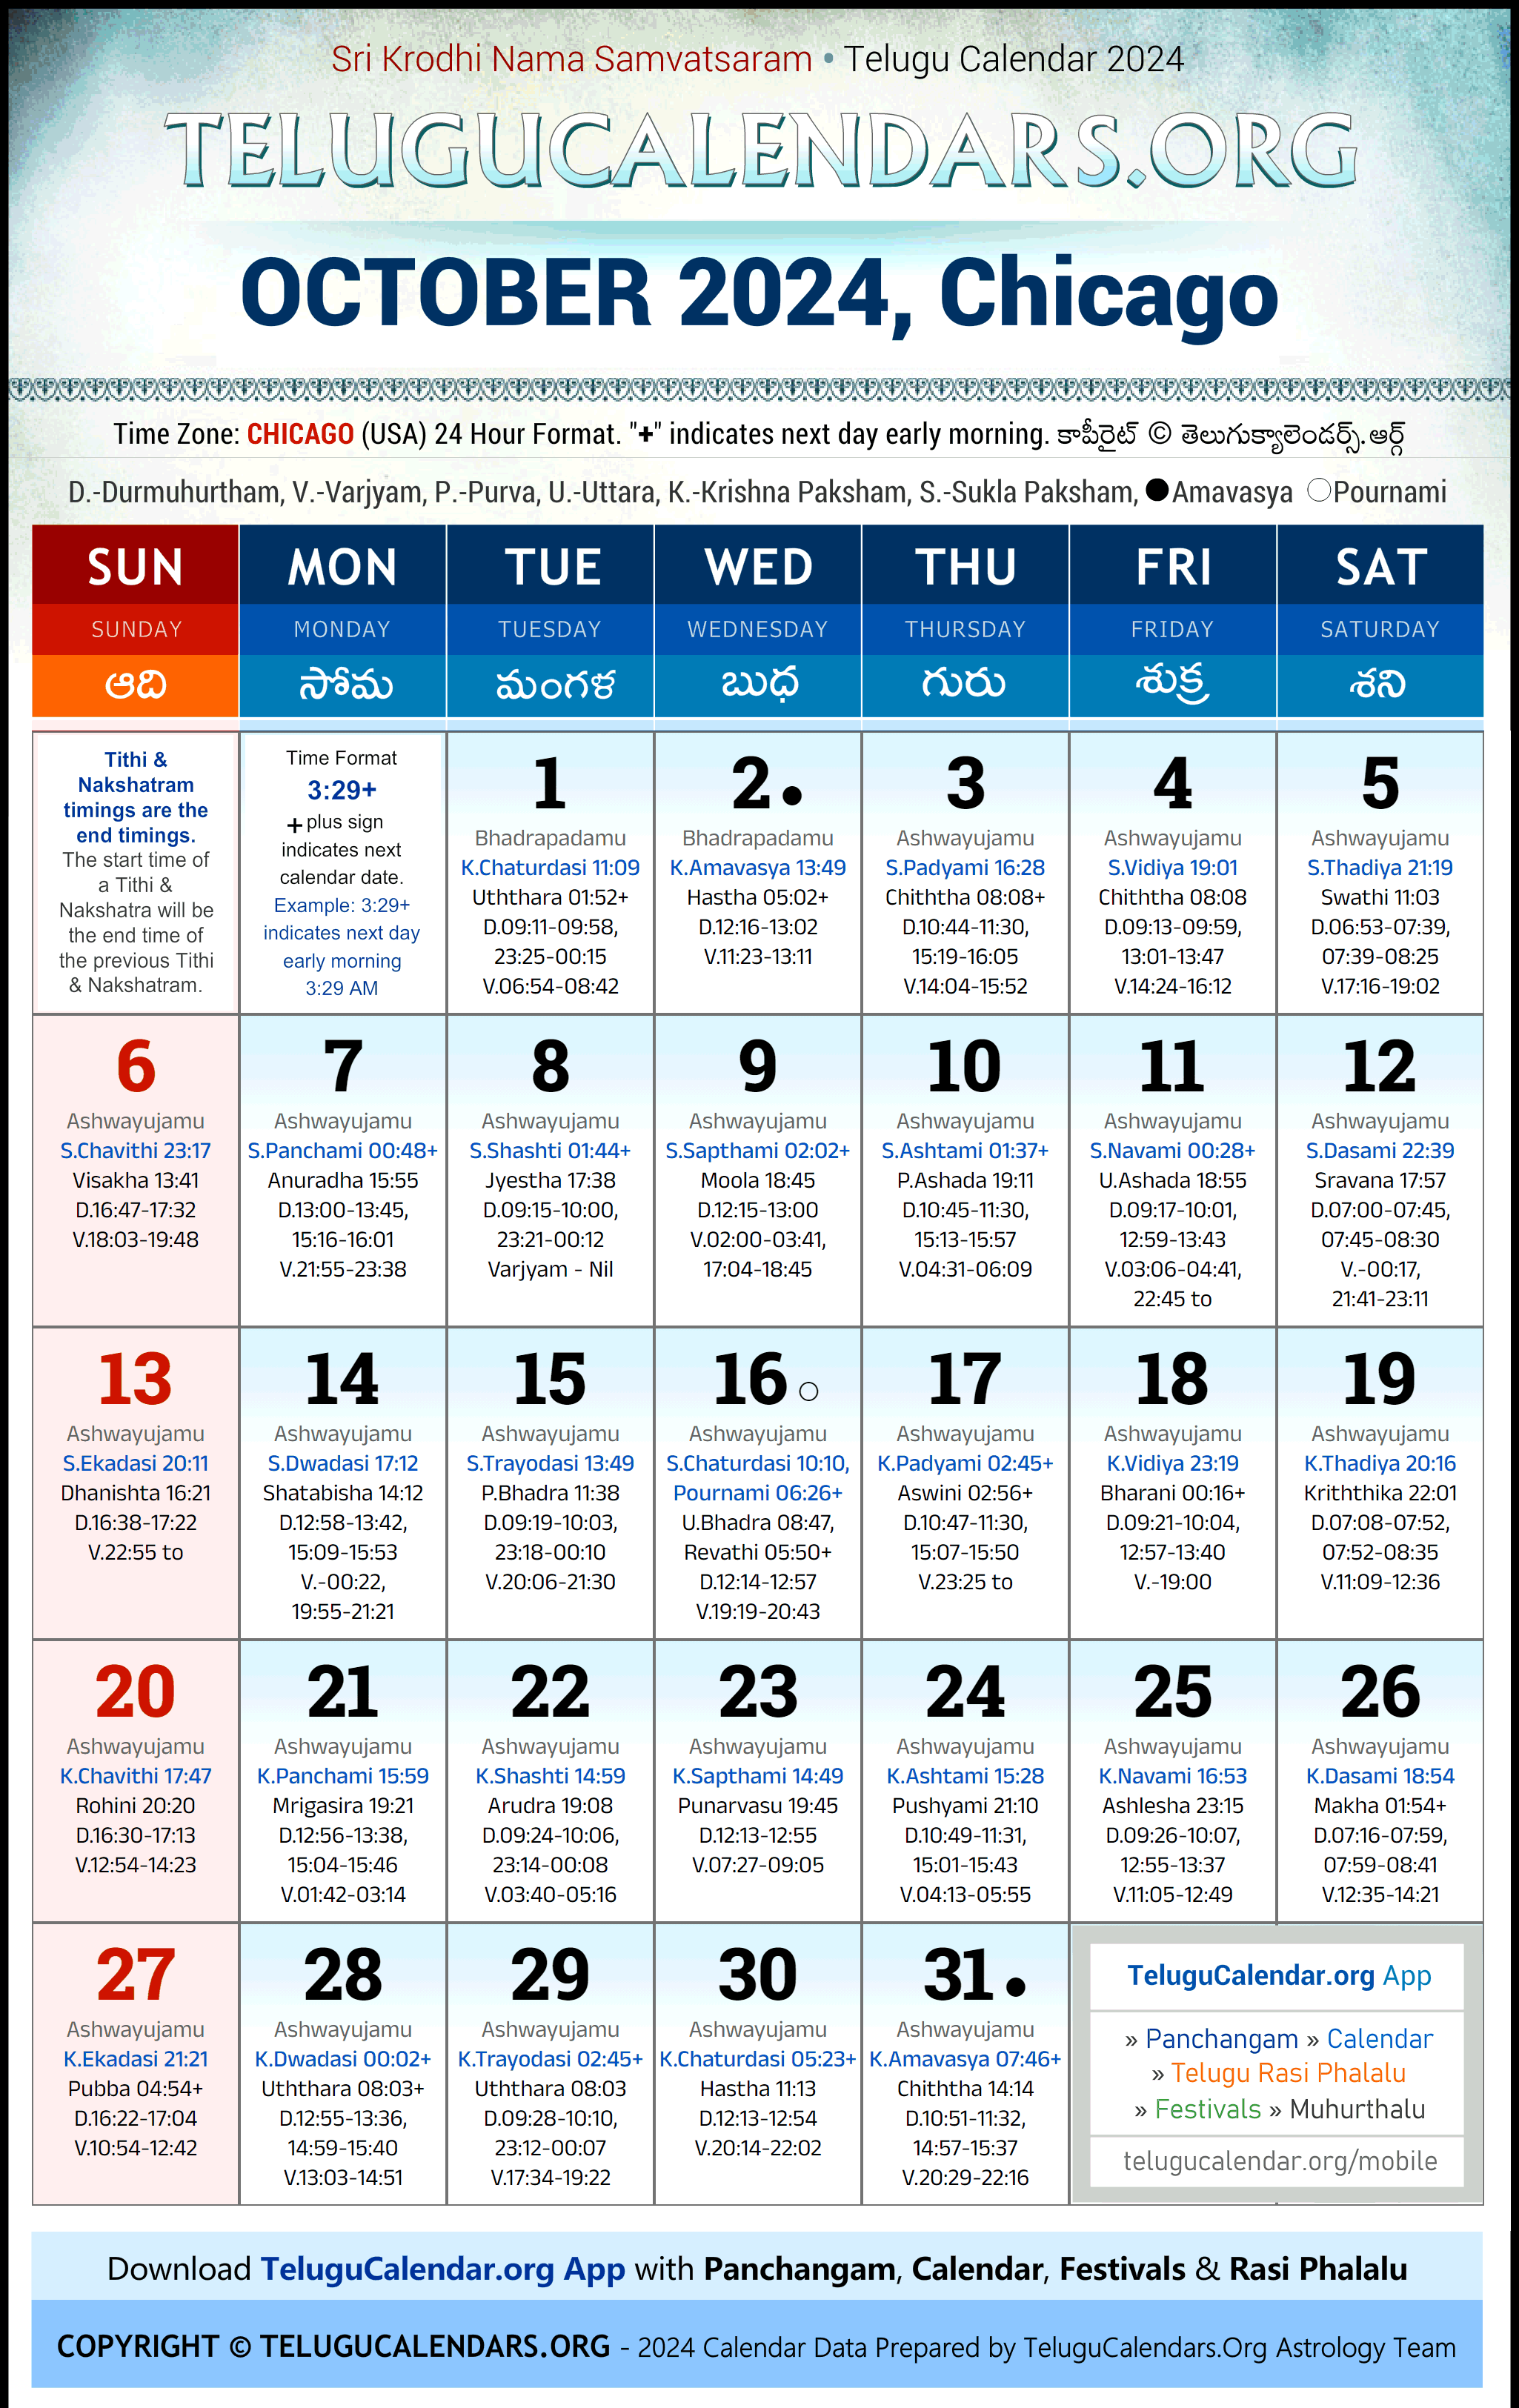 Telugu Calendar 2024 October Festivals for Chicago